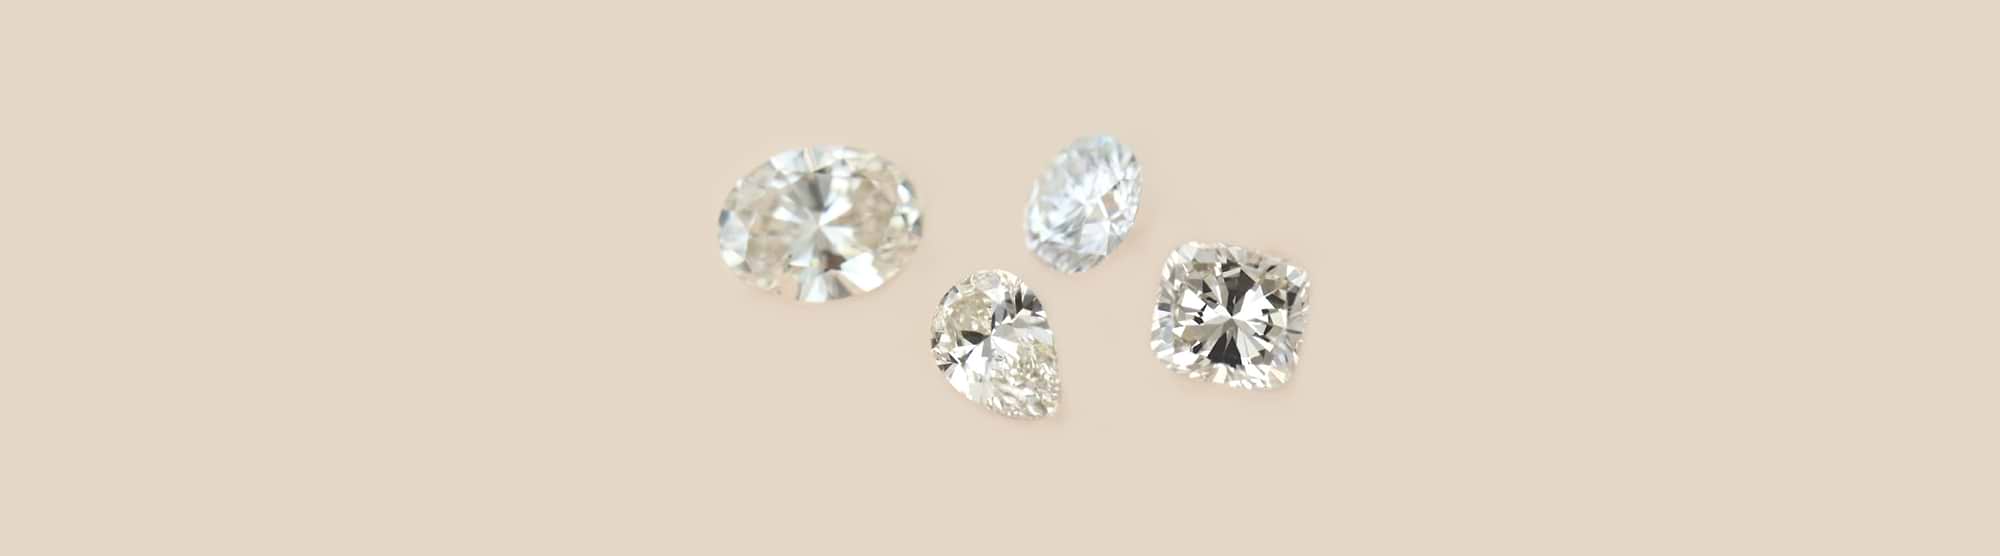 Saleem Ali: Lab-Grown Diamonds vs. Mined Diamonds - Environmental Impact